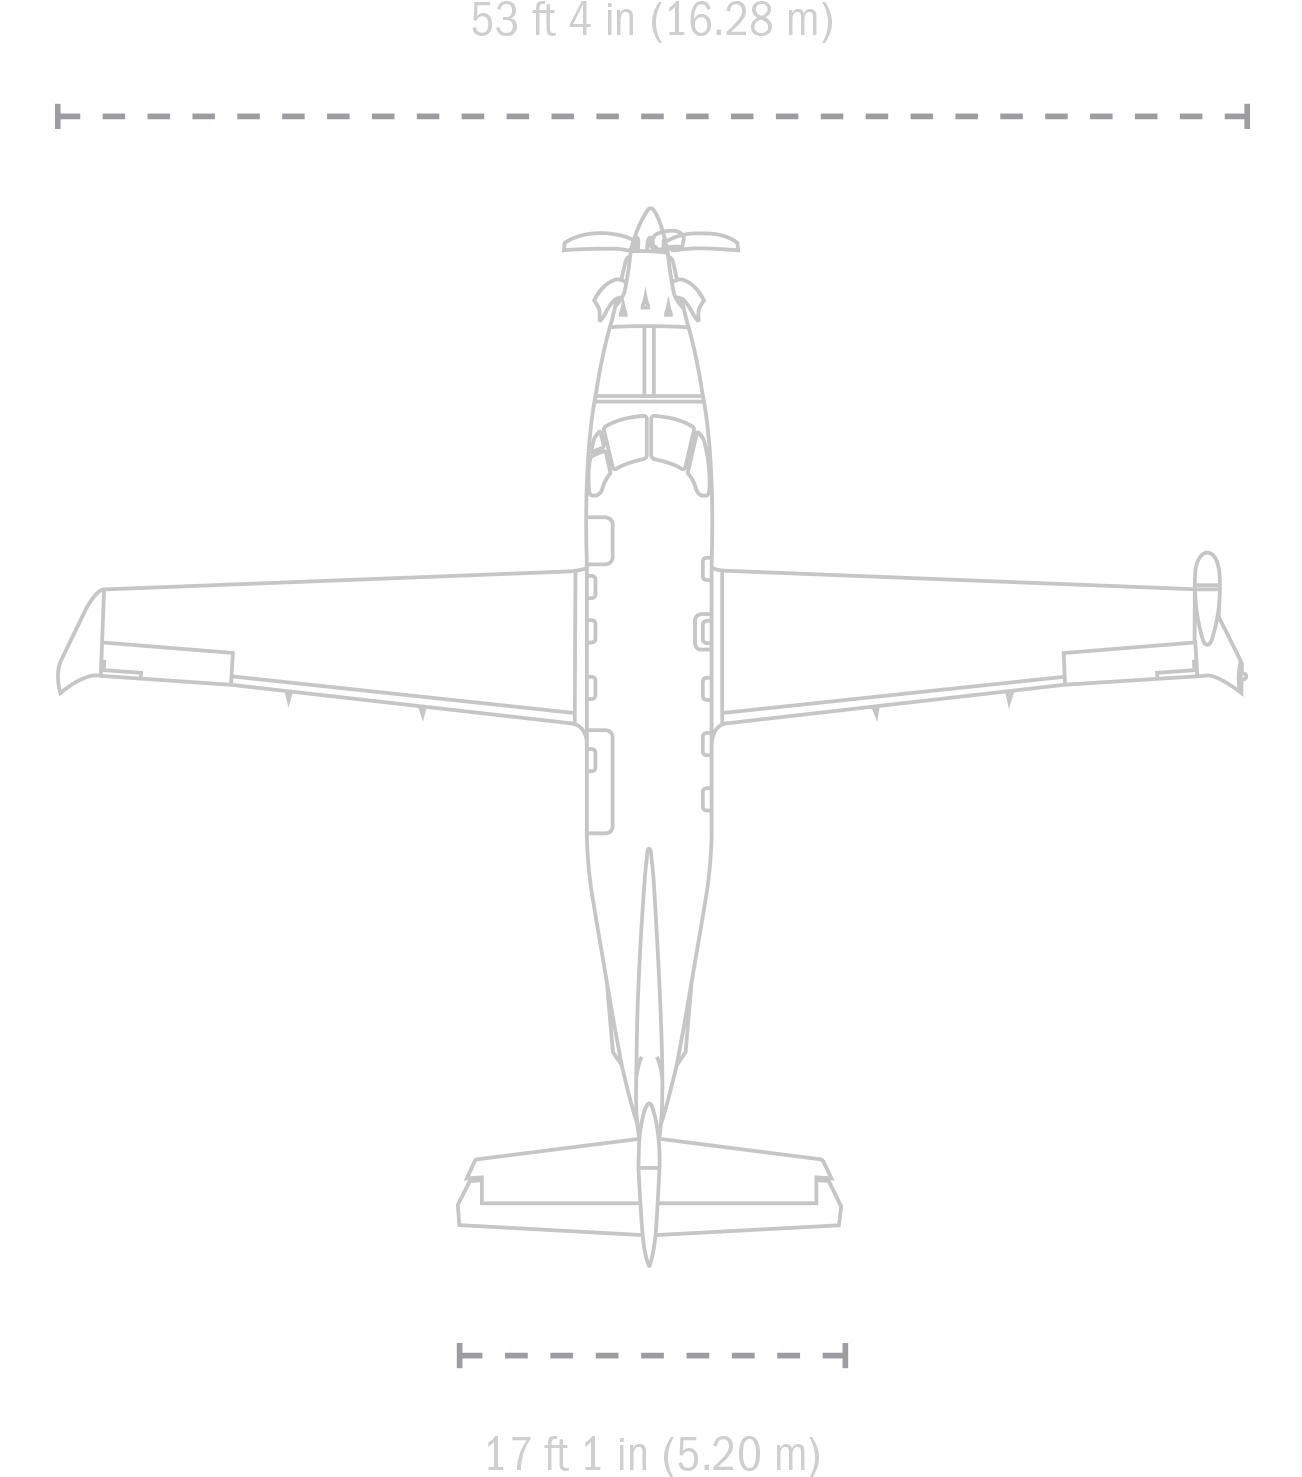 Pc 12 Ngx The World S Greatest Single Pilatus Aircraft Ltd